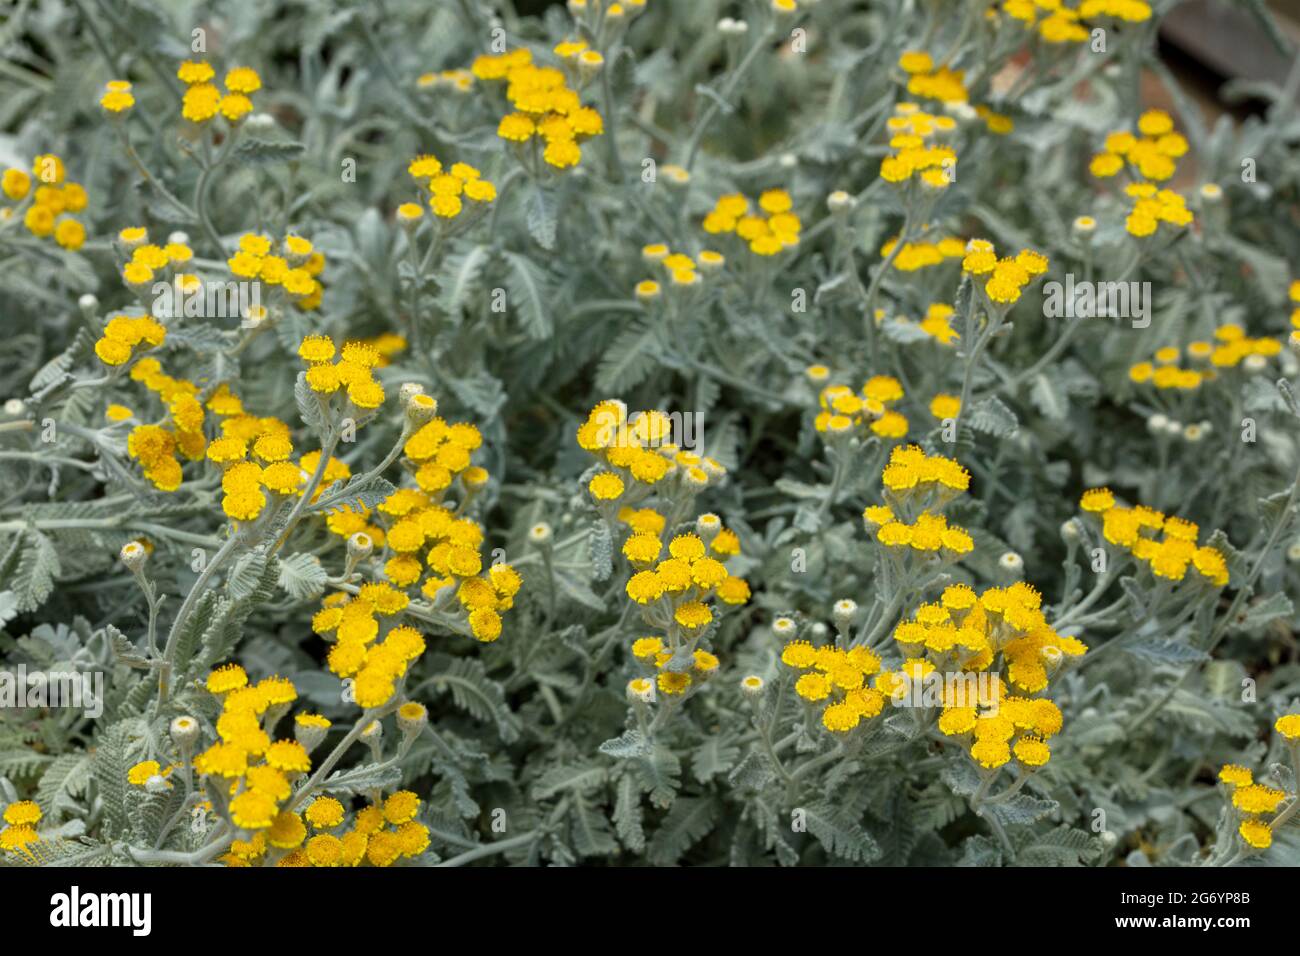 Tenacious Tanacetum haradjanii, family Asteraceae, Silver lace tansy, Silverlace tansy, Chrysanthemum haradjanii, flowering Stock Photo